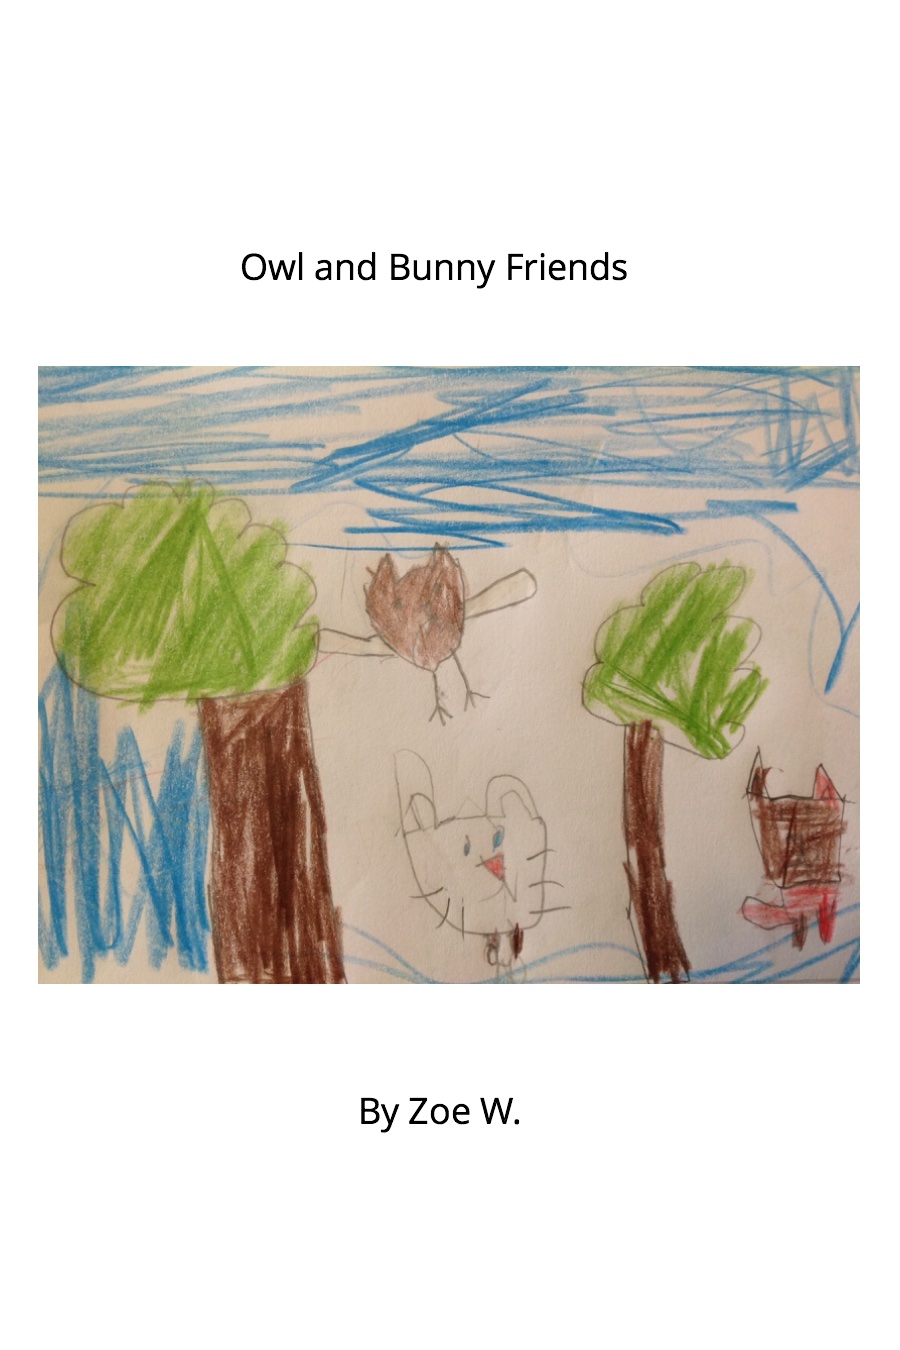 Owl and Bunny Friends! By Zoe W